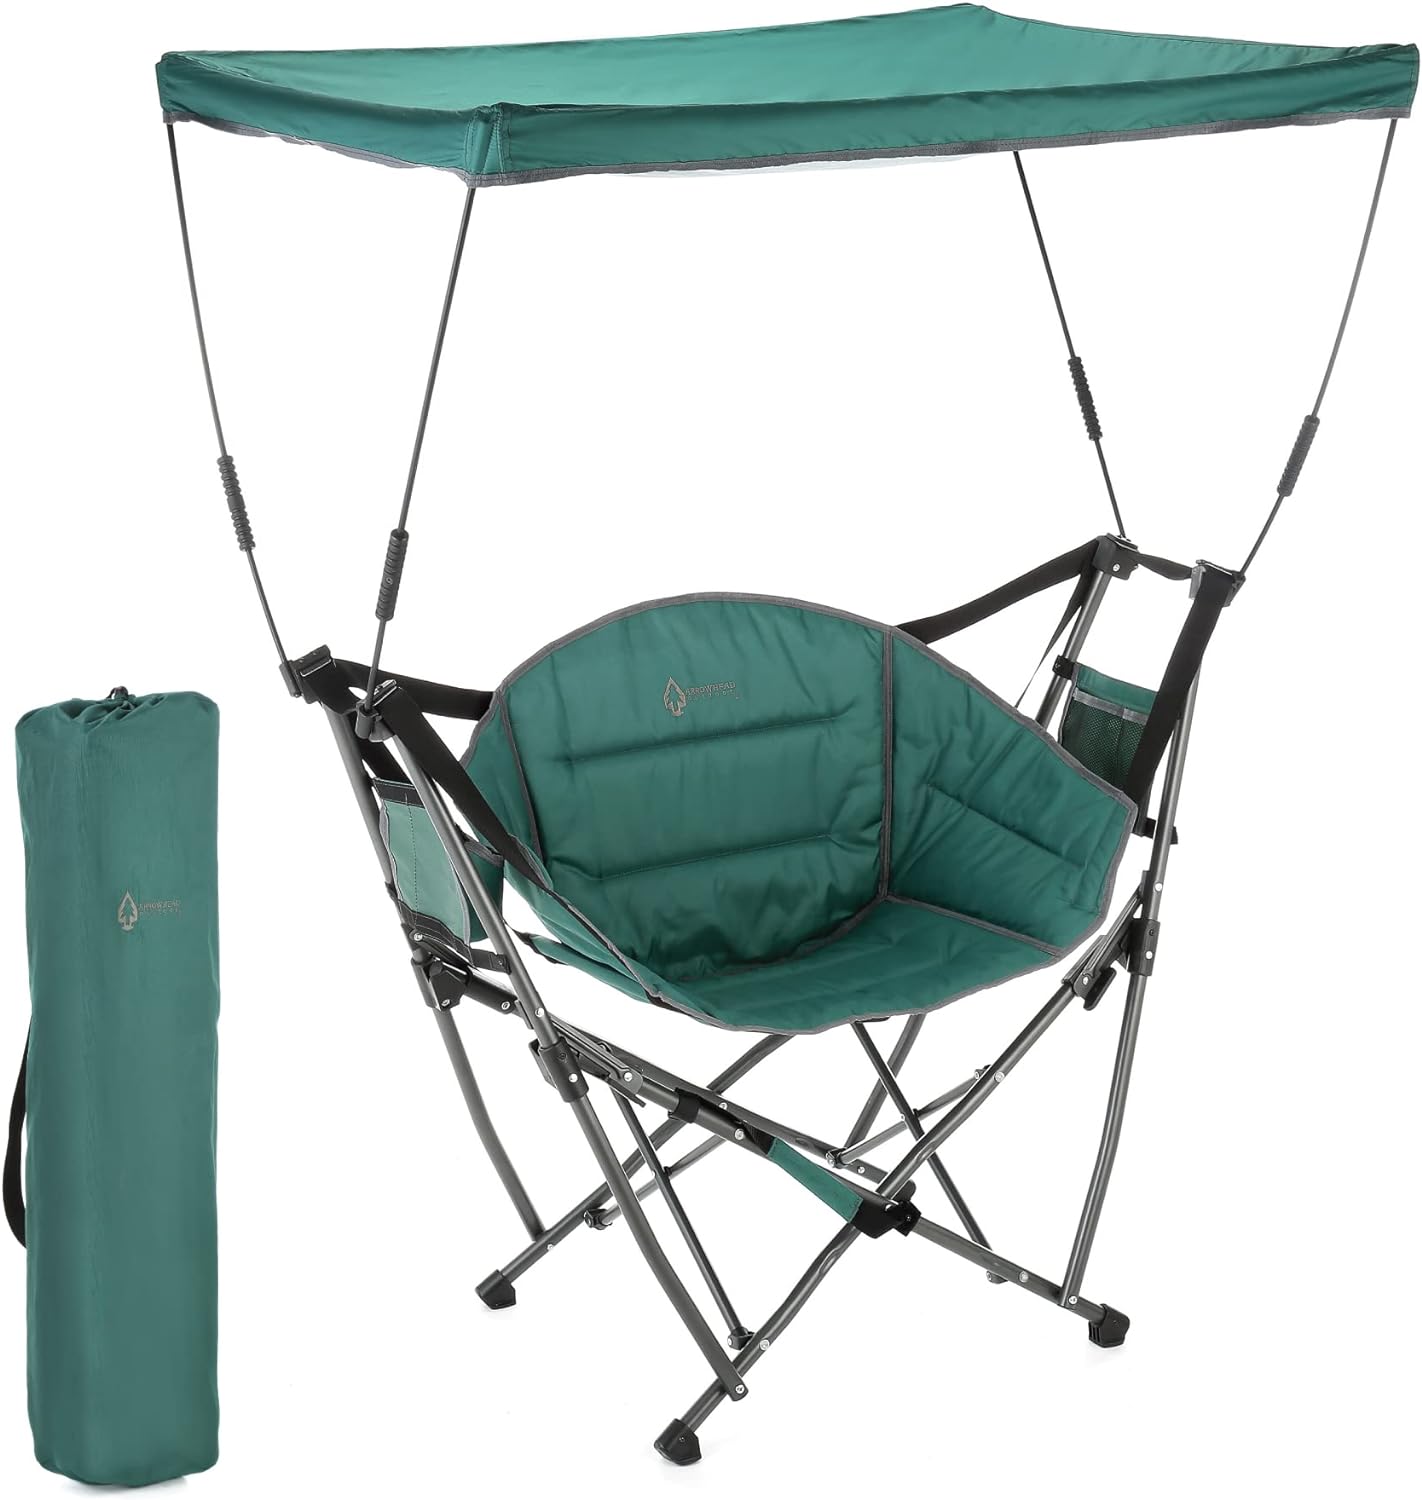 Portable Folding Swinging Hammock Camping Chair